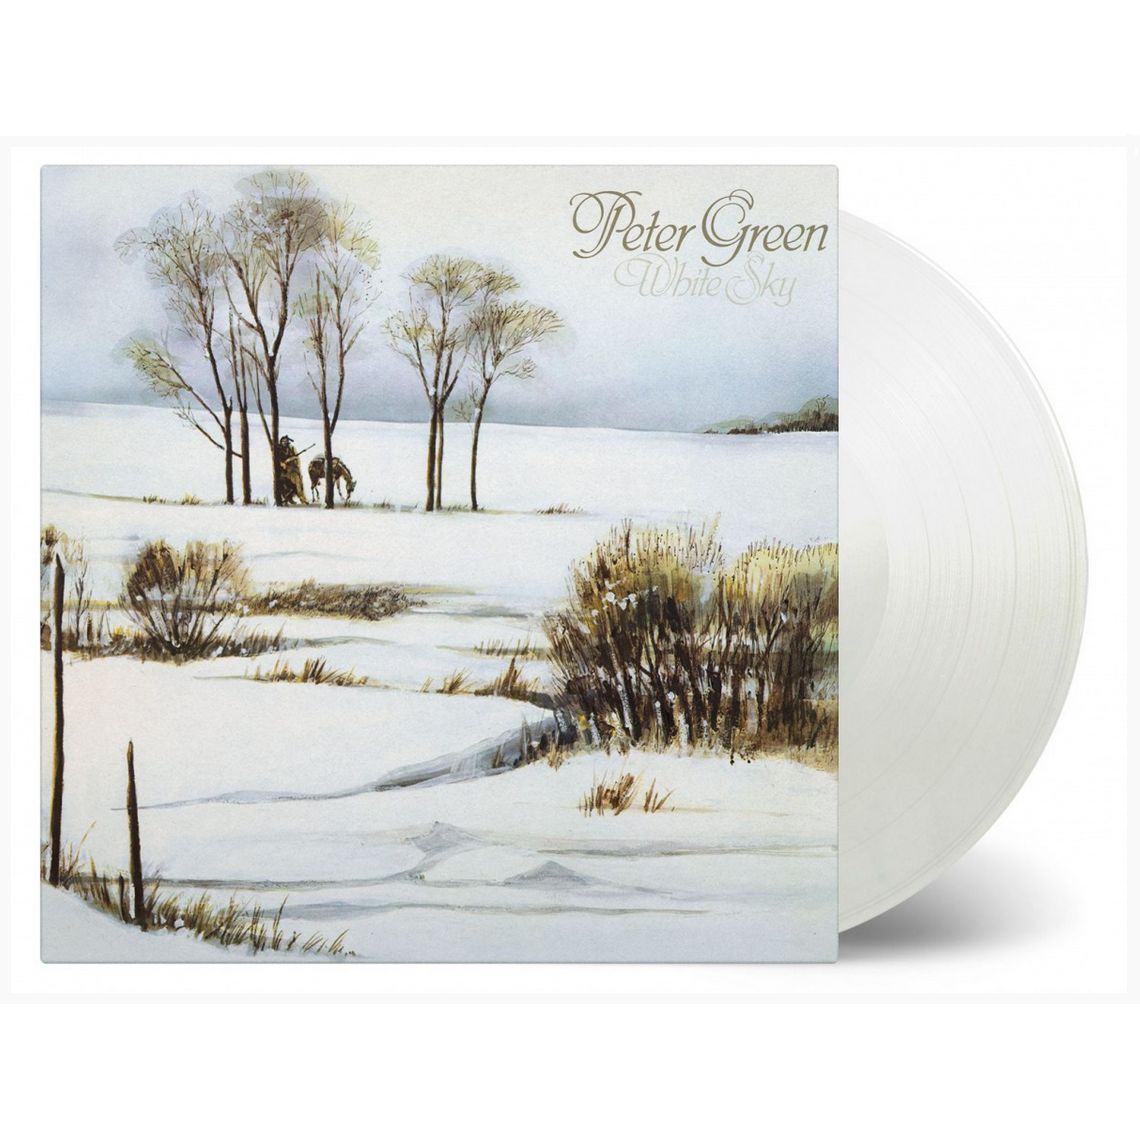 PETER GREEN / ピーター・グリーン / WHITE SKY (COLORED LP)